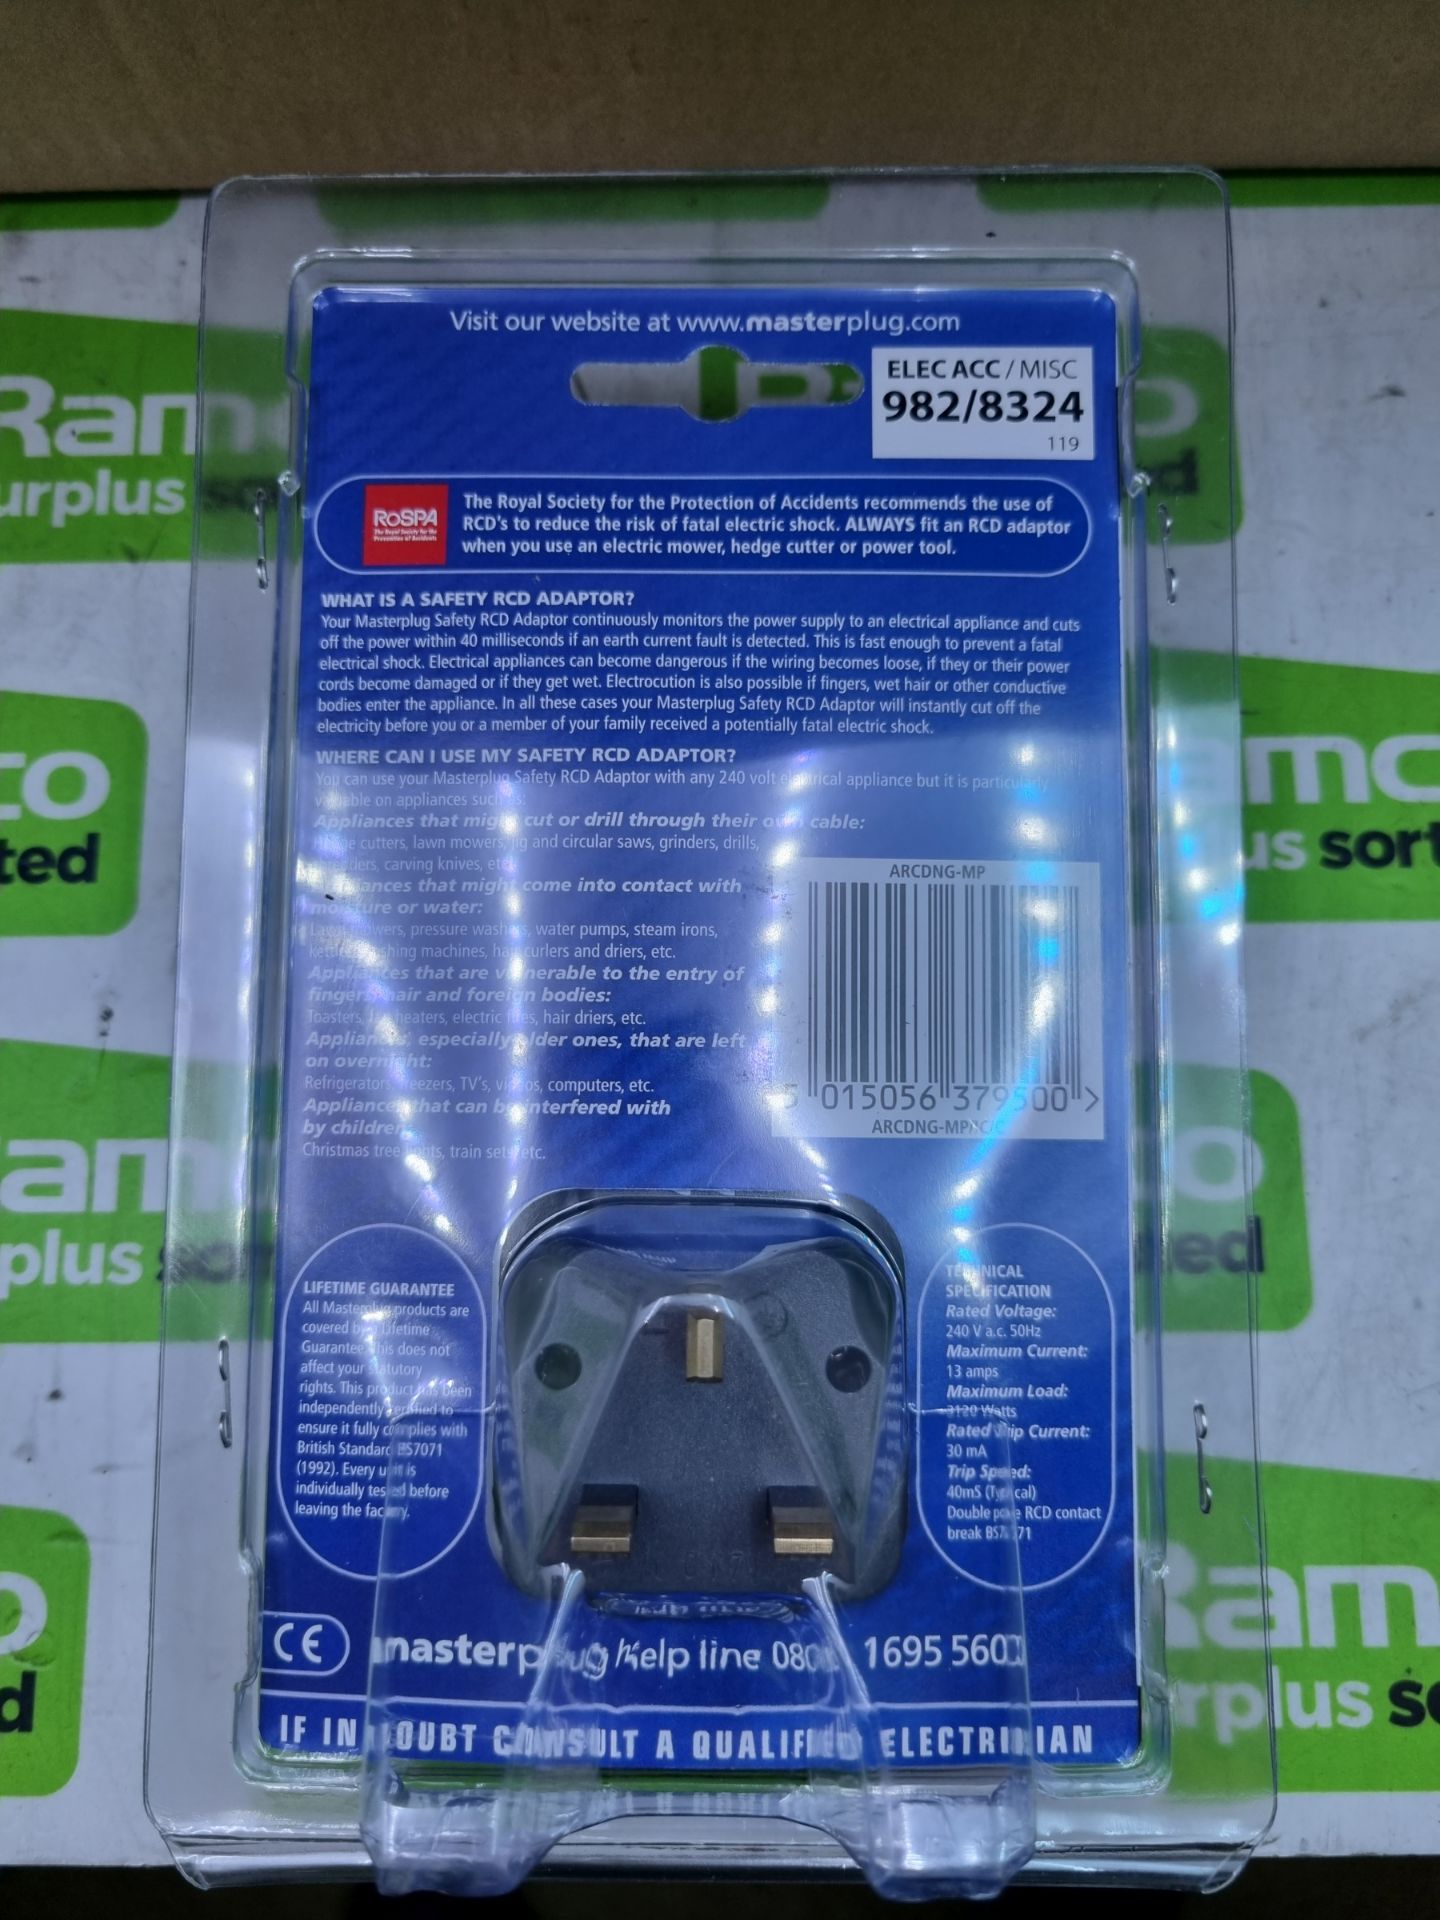 Masterplug Safety RCD Adaptor Plug 10 Per Box - 1 box - Image 4 of 4